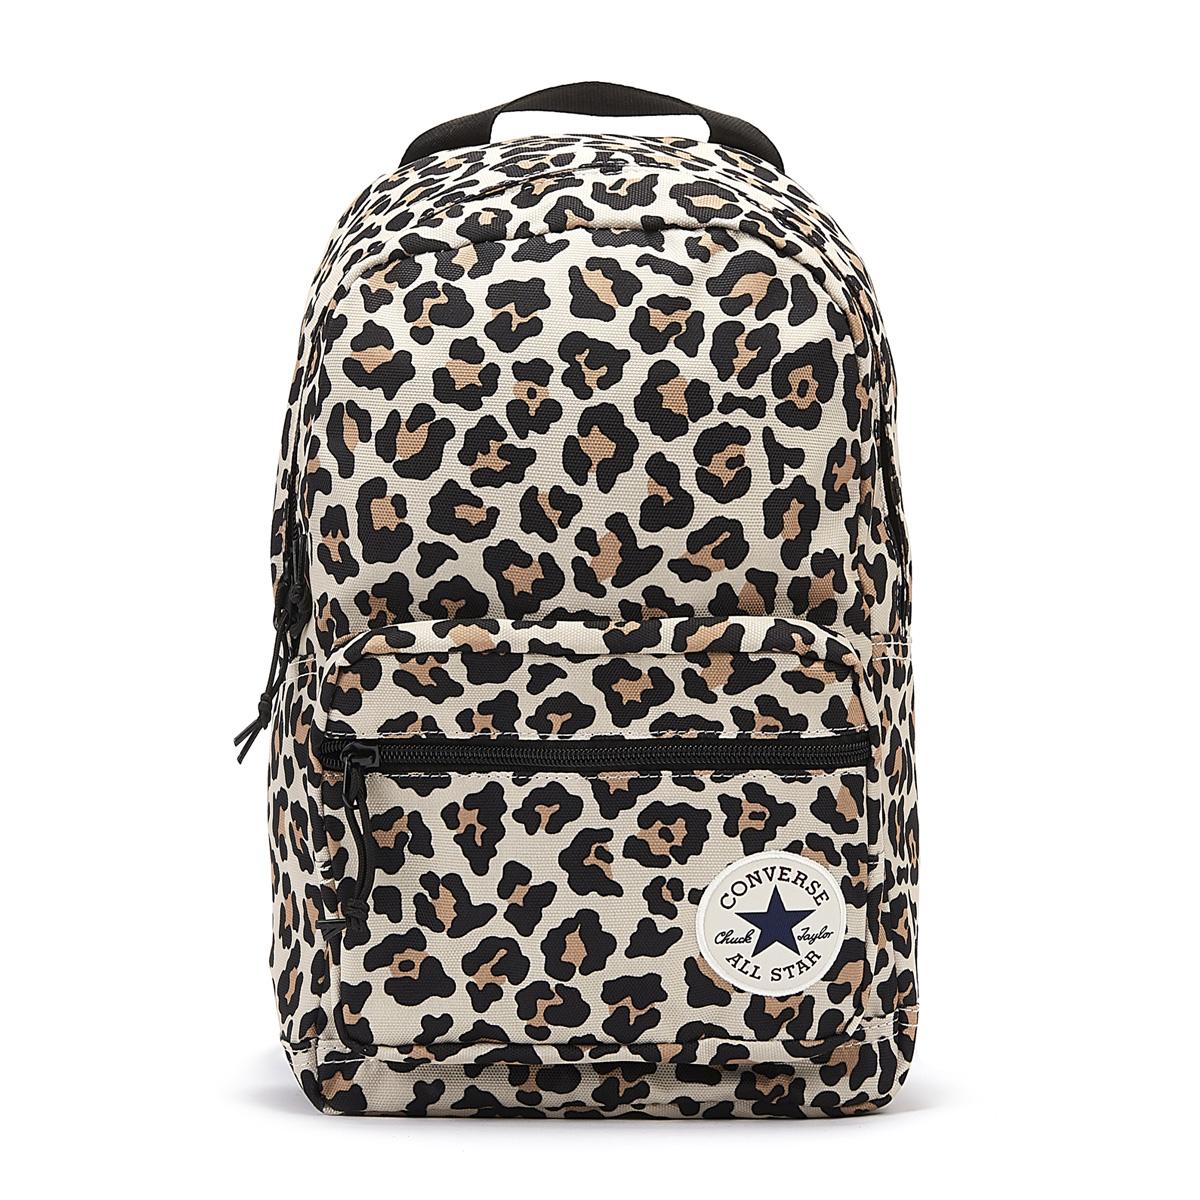 converse leopard print backpack